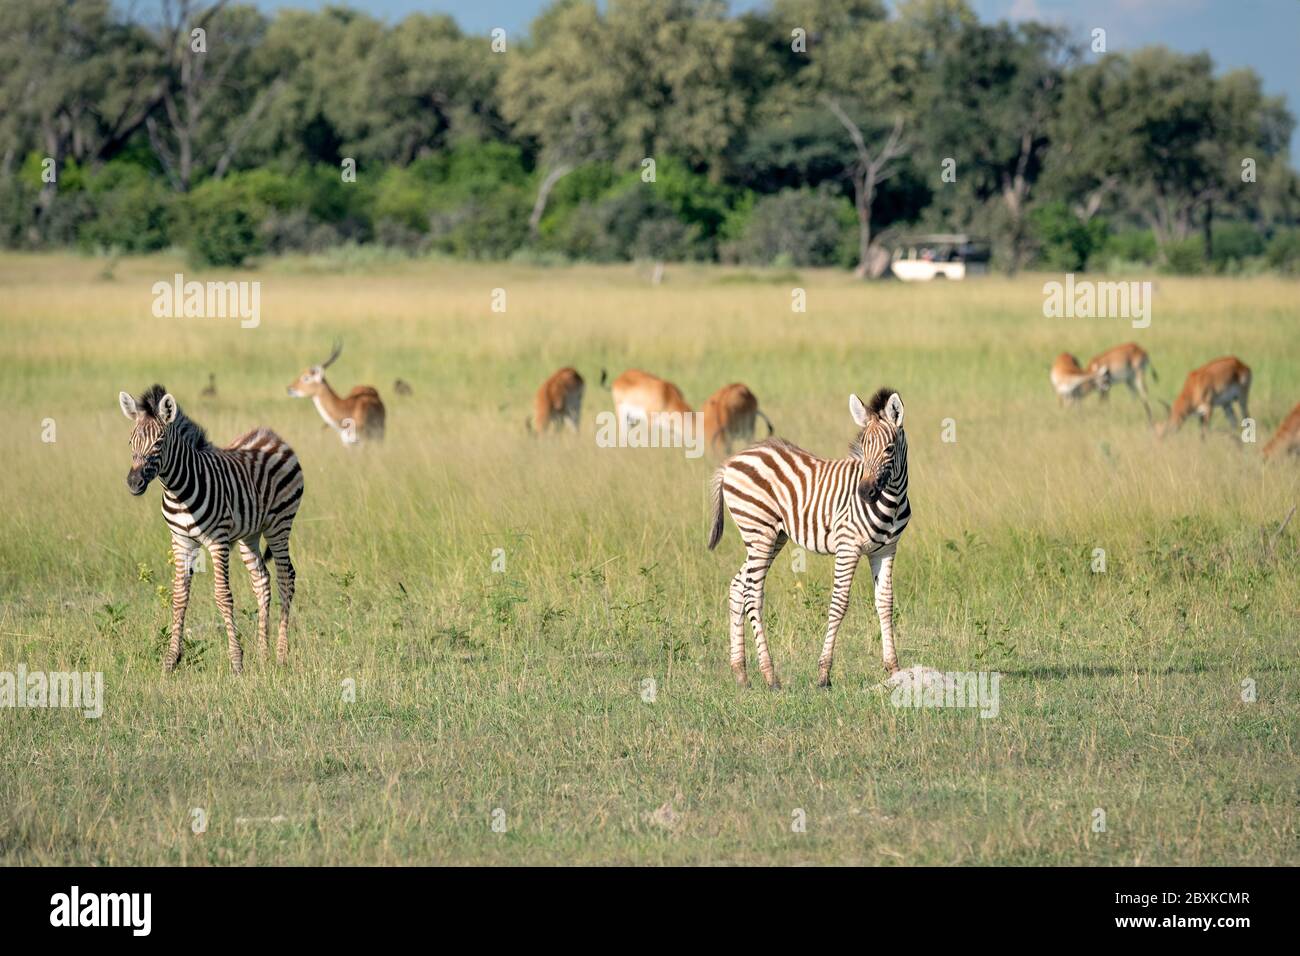 Mixed herd of zebra and impala grazing on grass with two young zebra foals. Image taken on the Okavango Delta, Botswana. Stock Photo